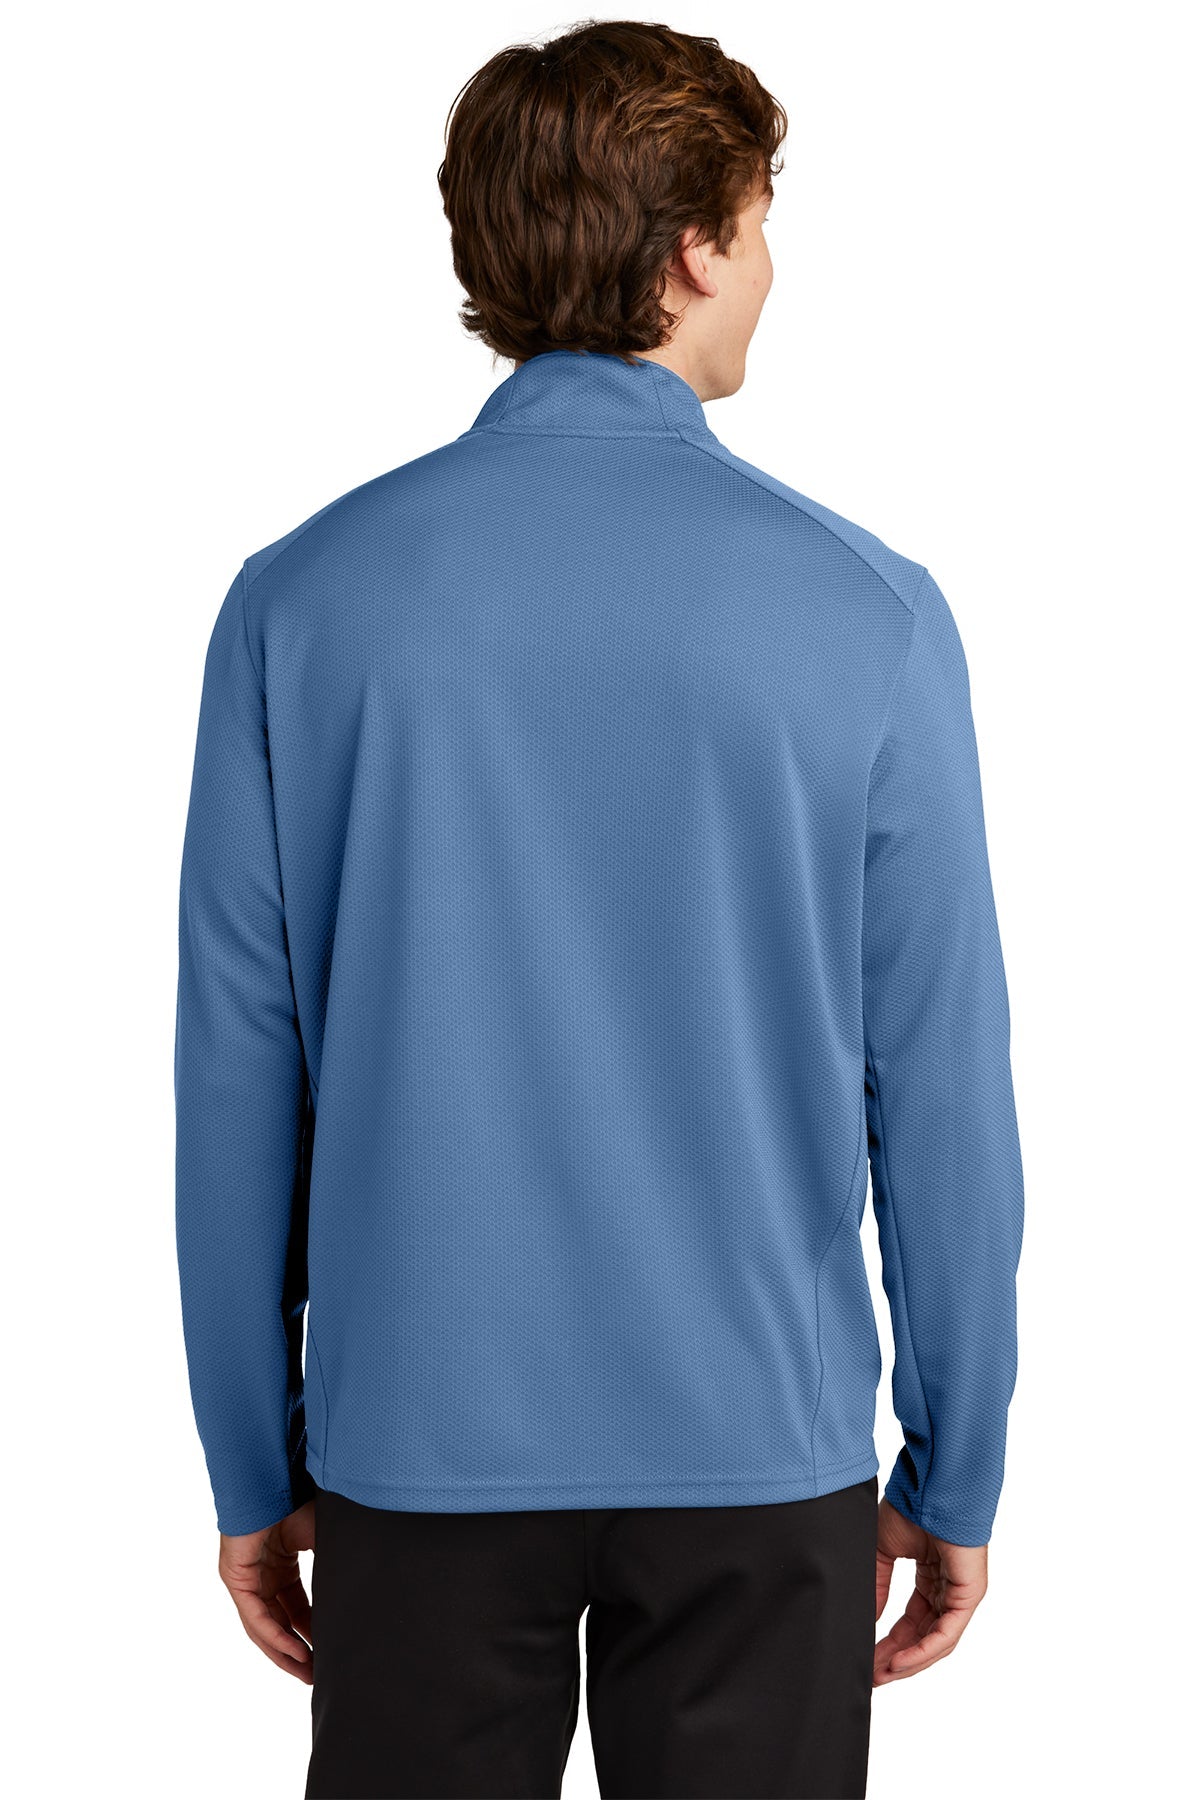 sport-tek_st860 _dawn blue_company_logo_sweatshirts